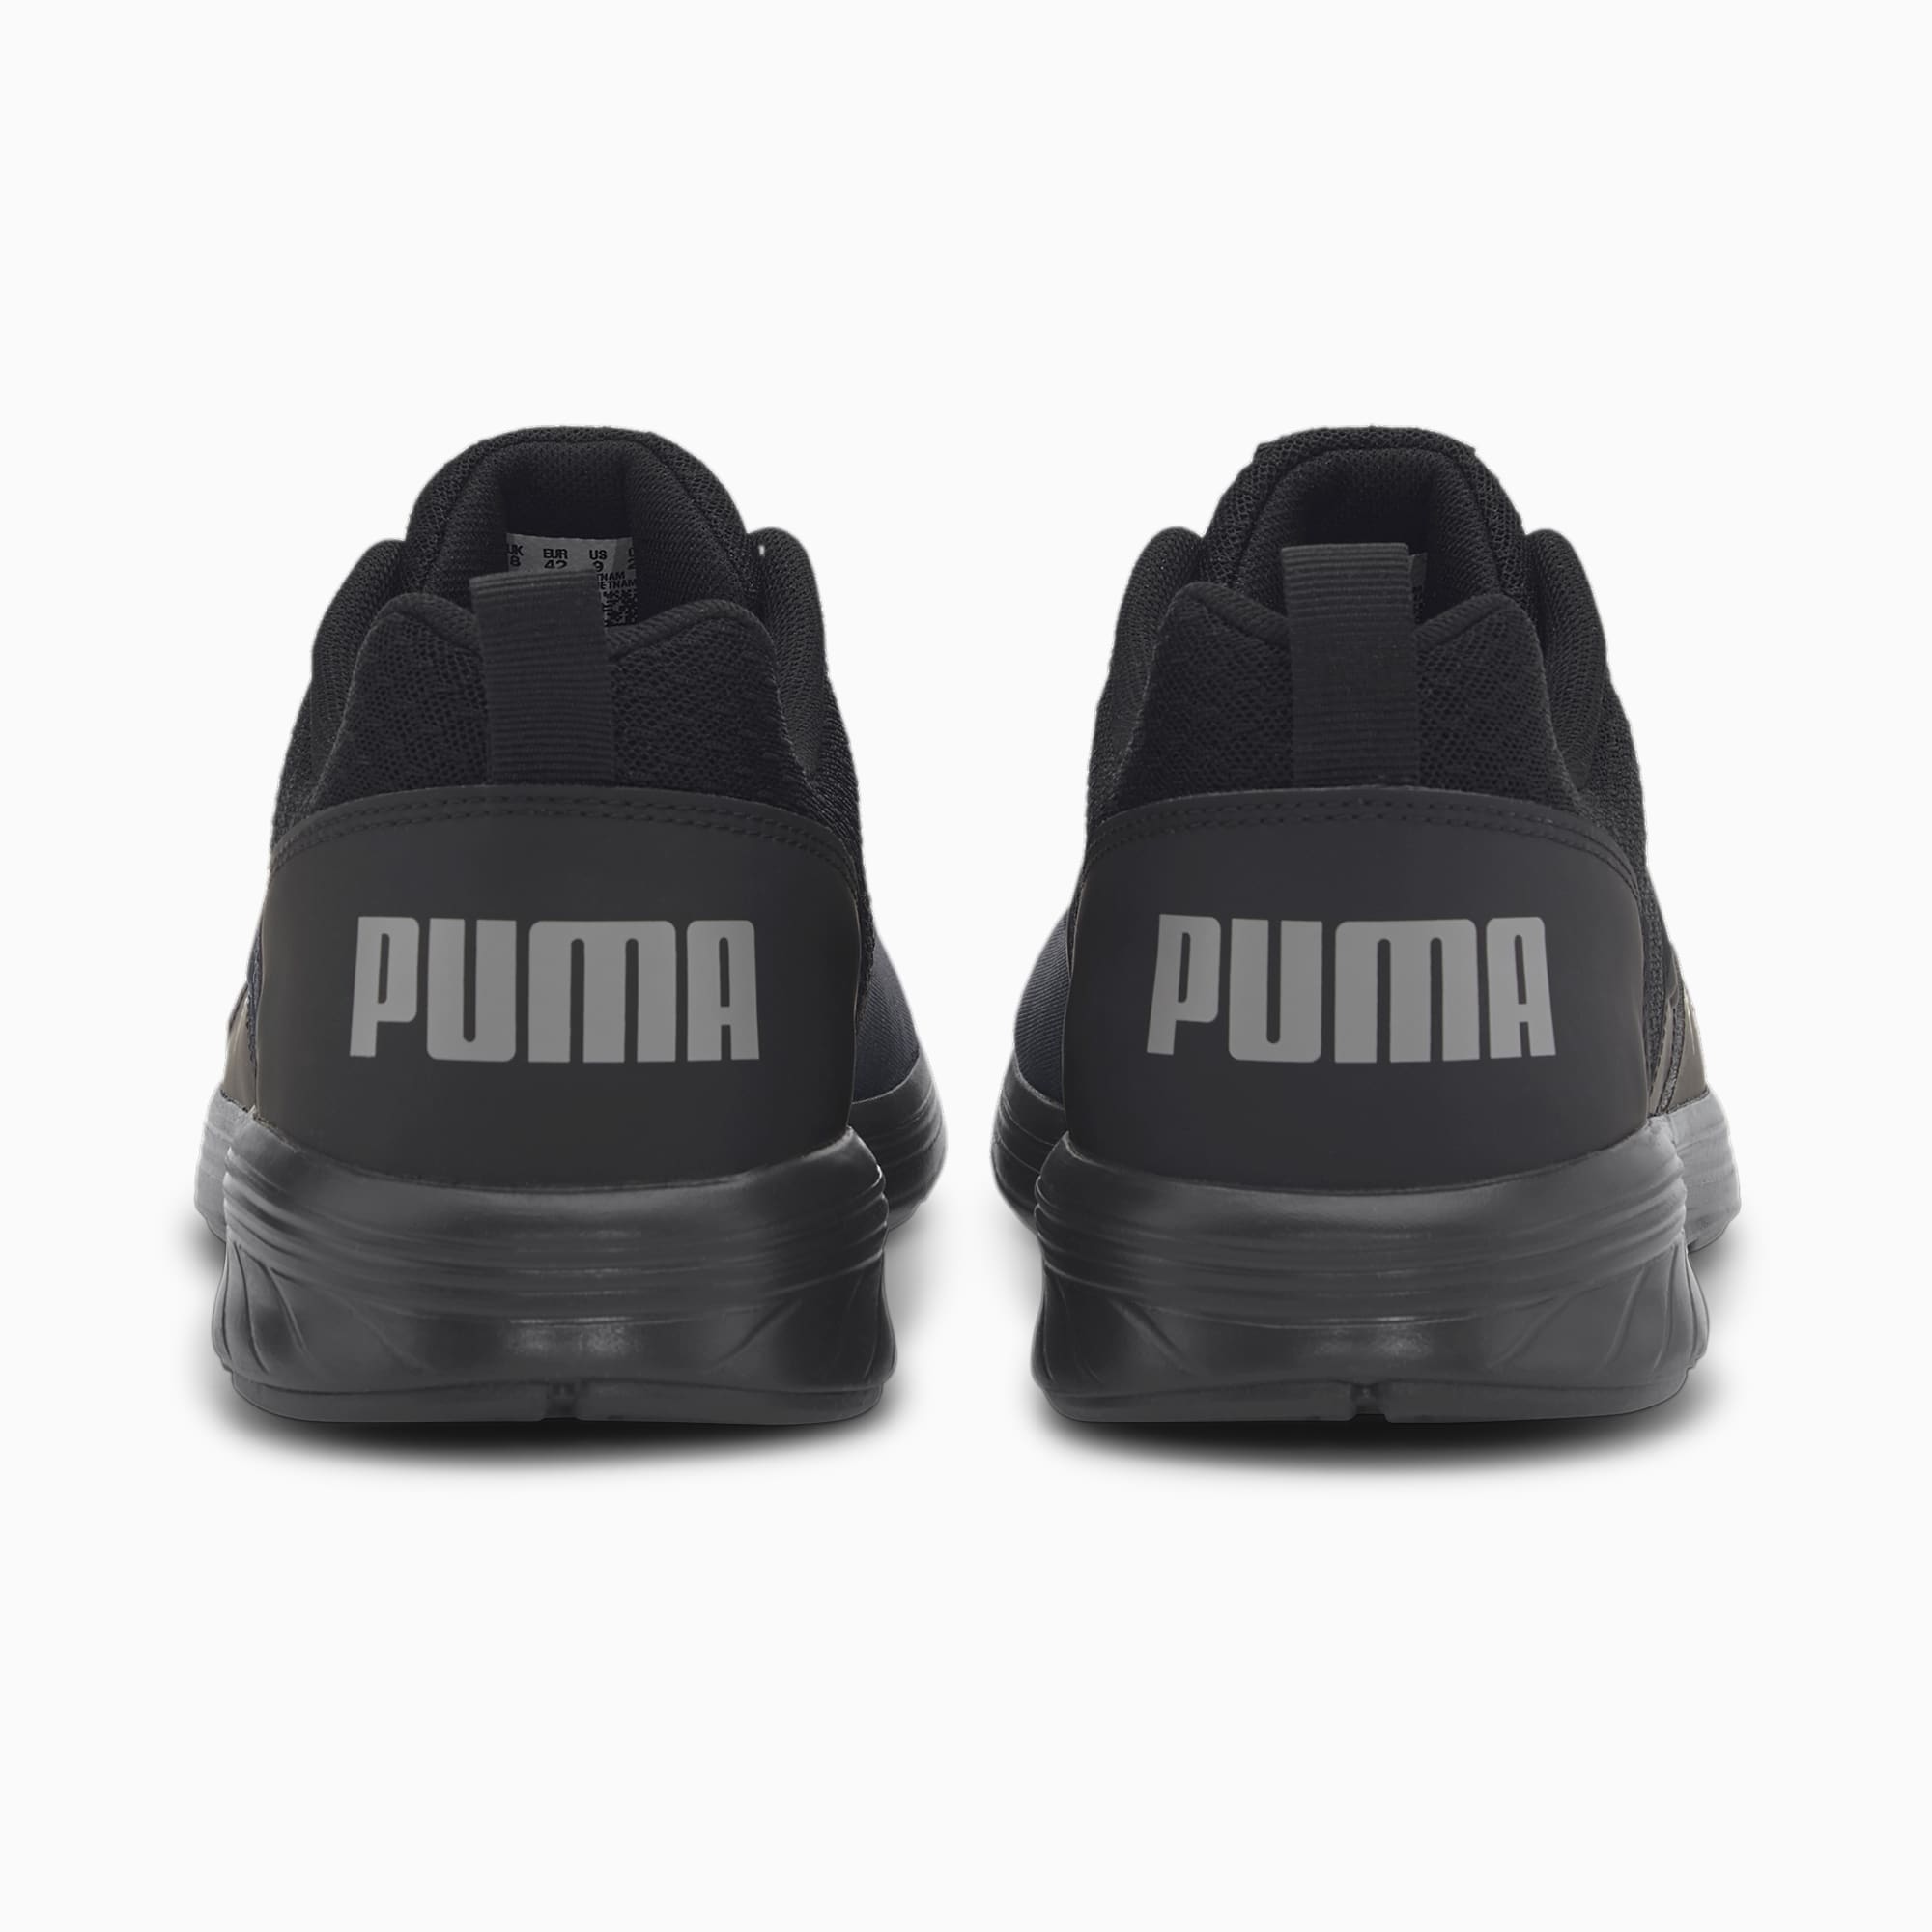 PUMA Chaussures De Running NRGY Comet, Noir/Gris